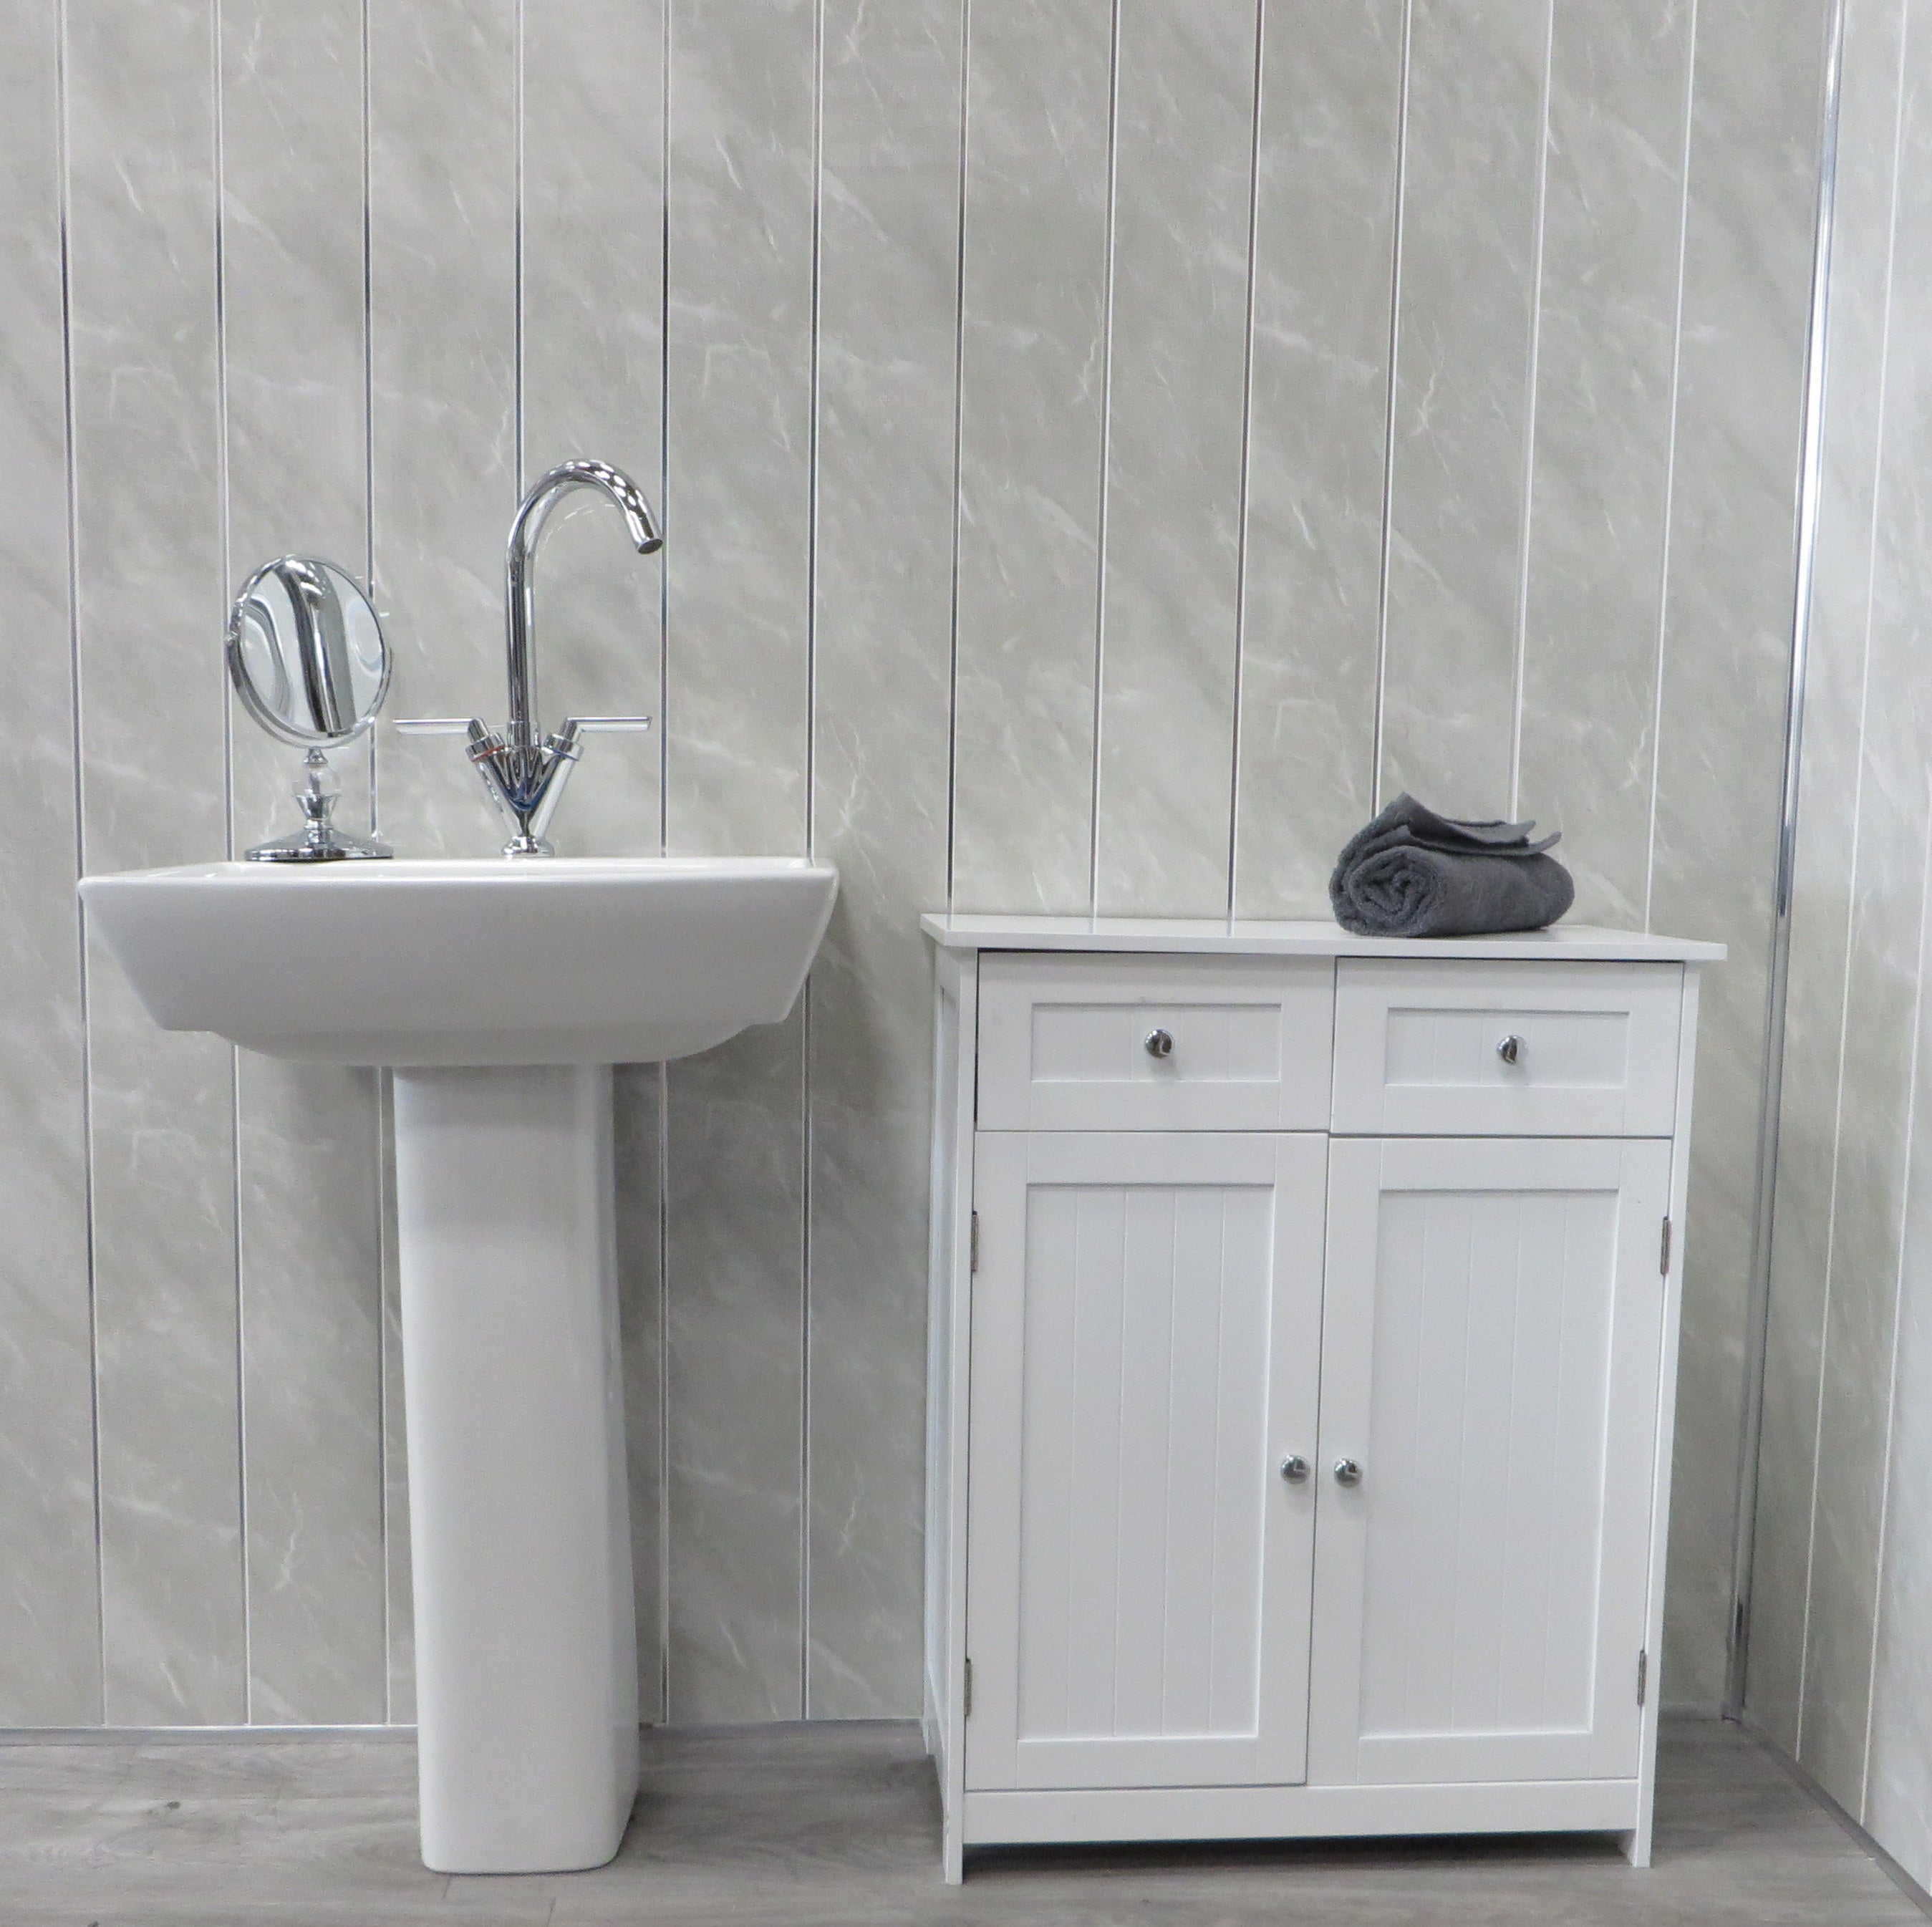 Grey Marble & Chrome 5mm Bathroom Cladding Wet Wall Panels